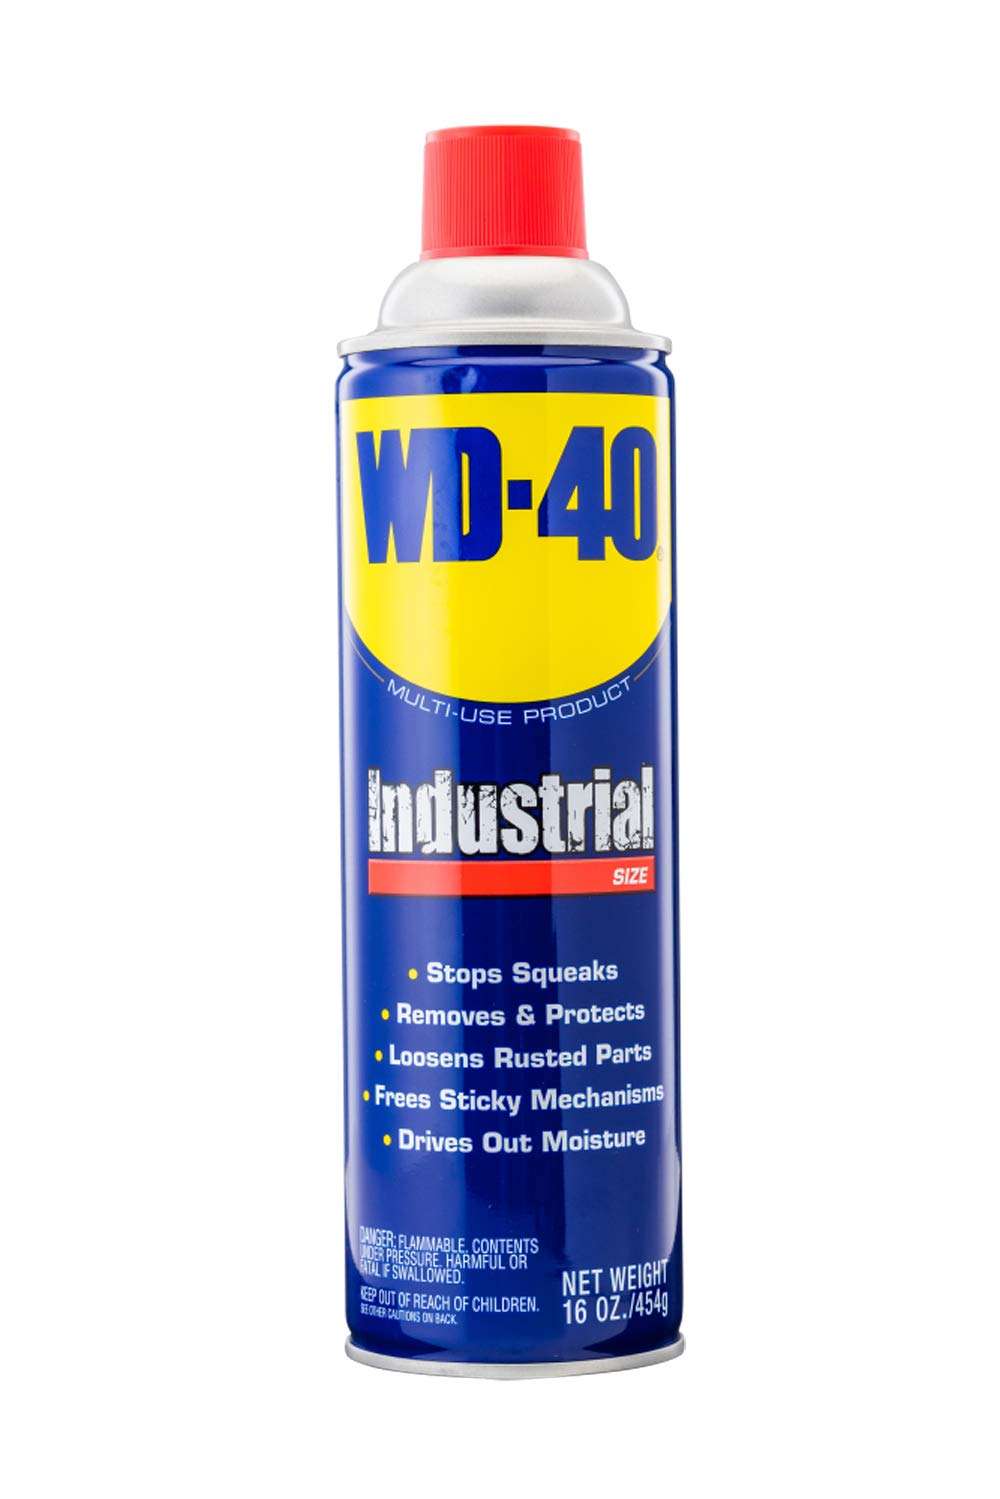 WD-40 Multi-Use Product - Multi-Purpose Lubricant Aerosol Spray